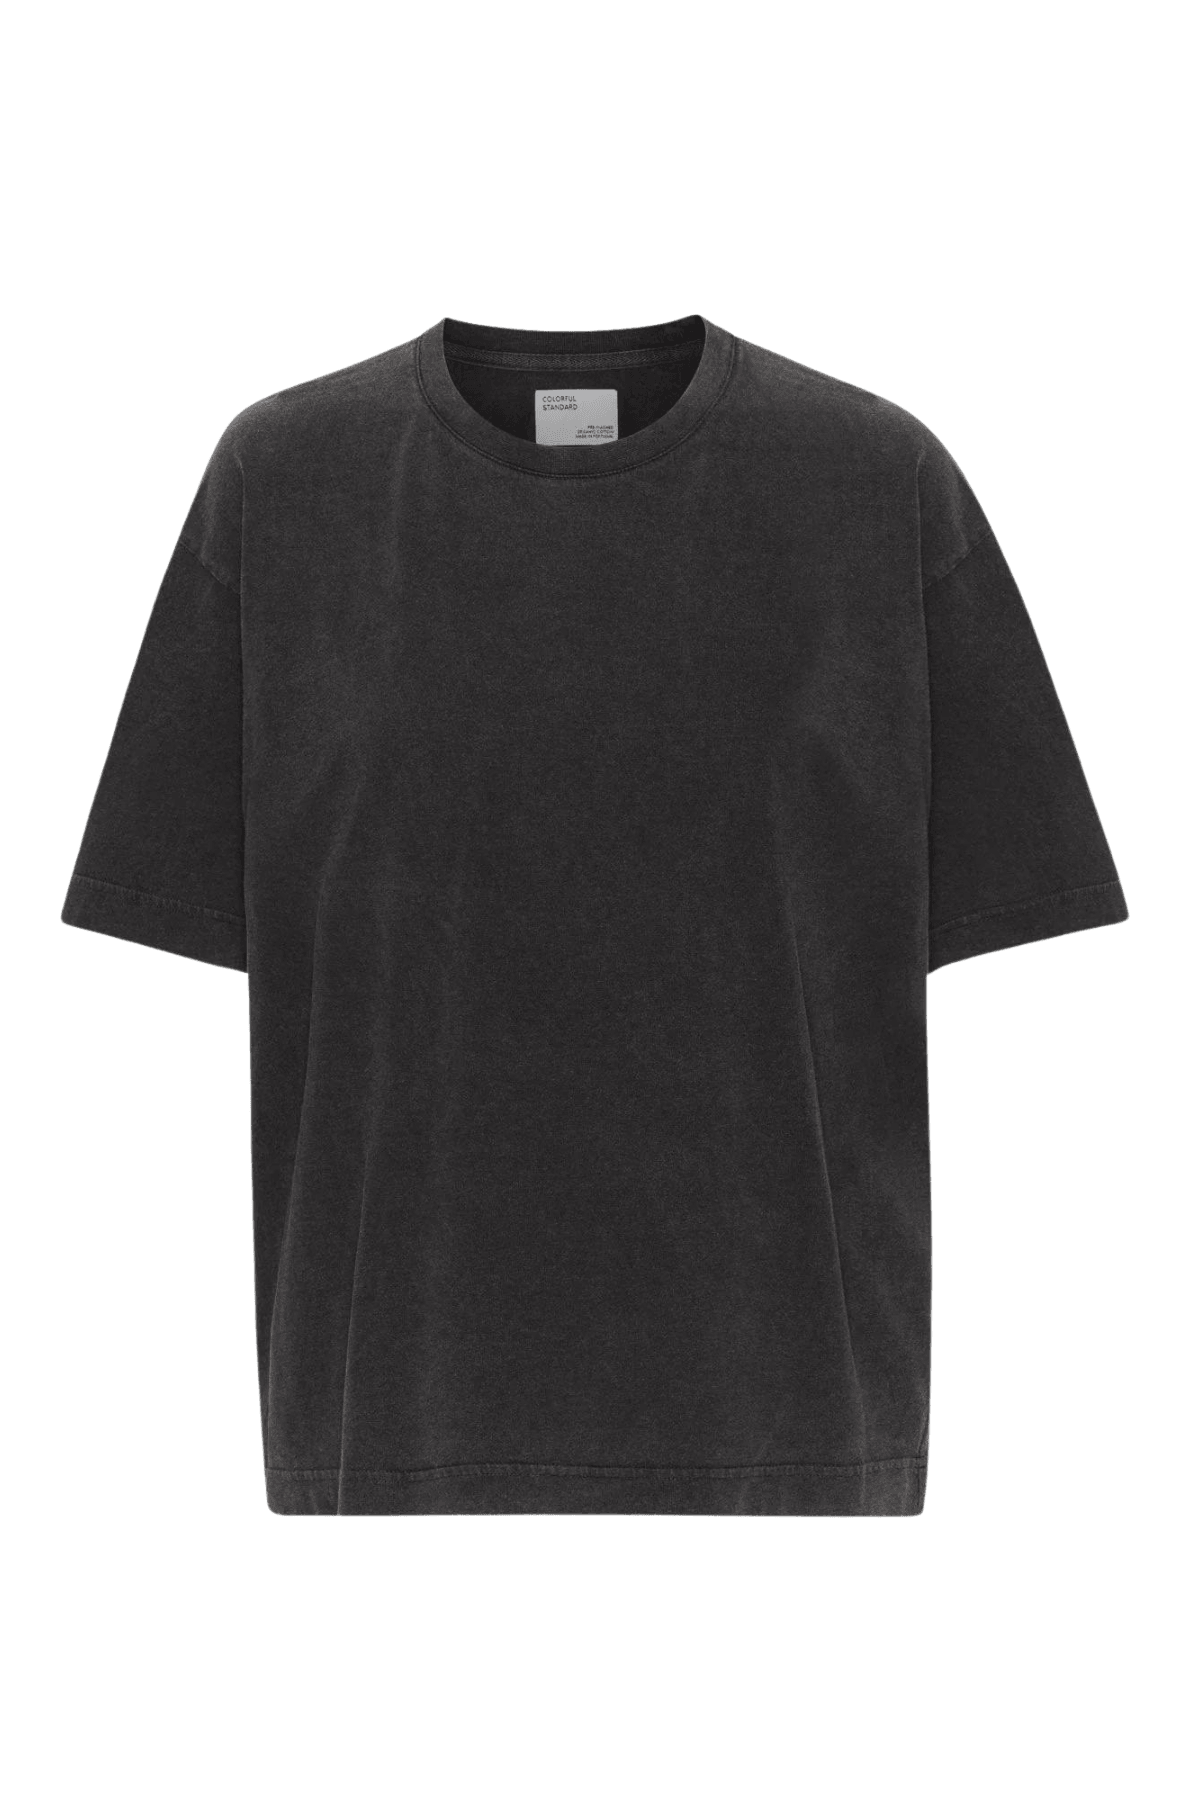 Camiseta Colorful Standard Oversize Faded Black - ECRU